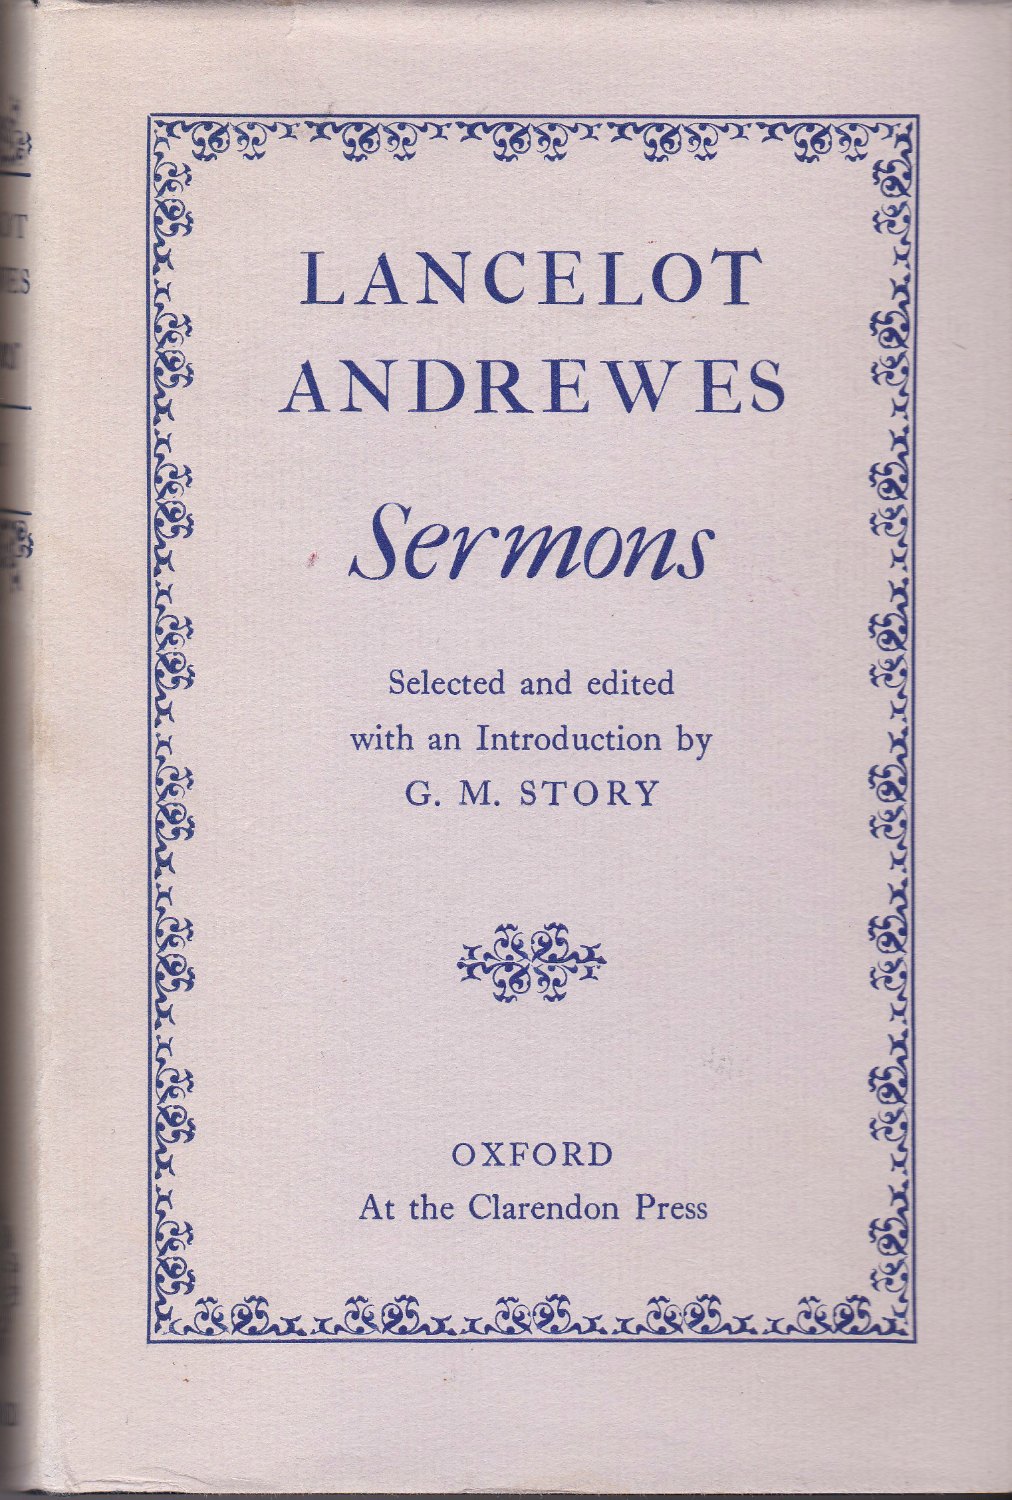 Lancelot Andrewes Sermons.